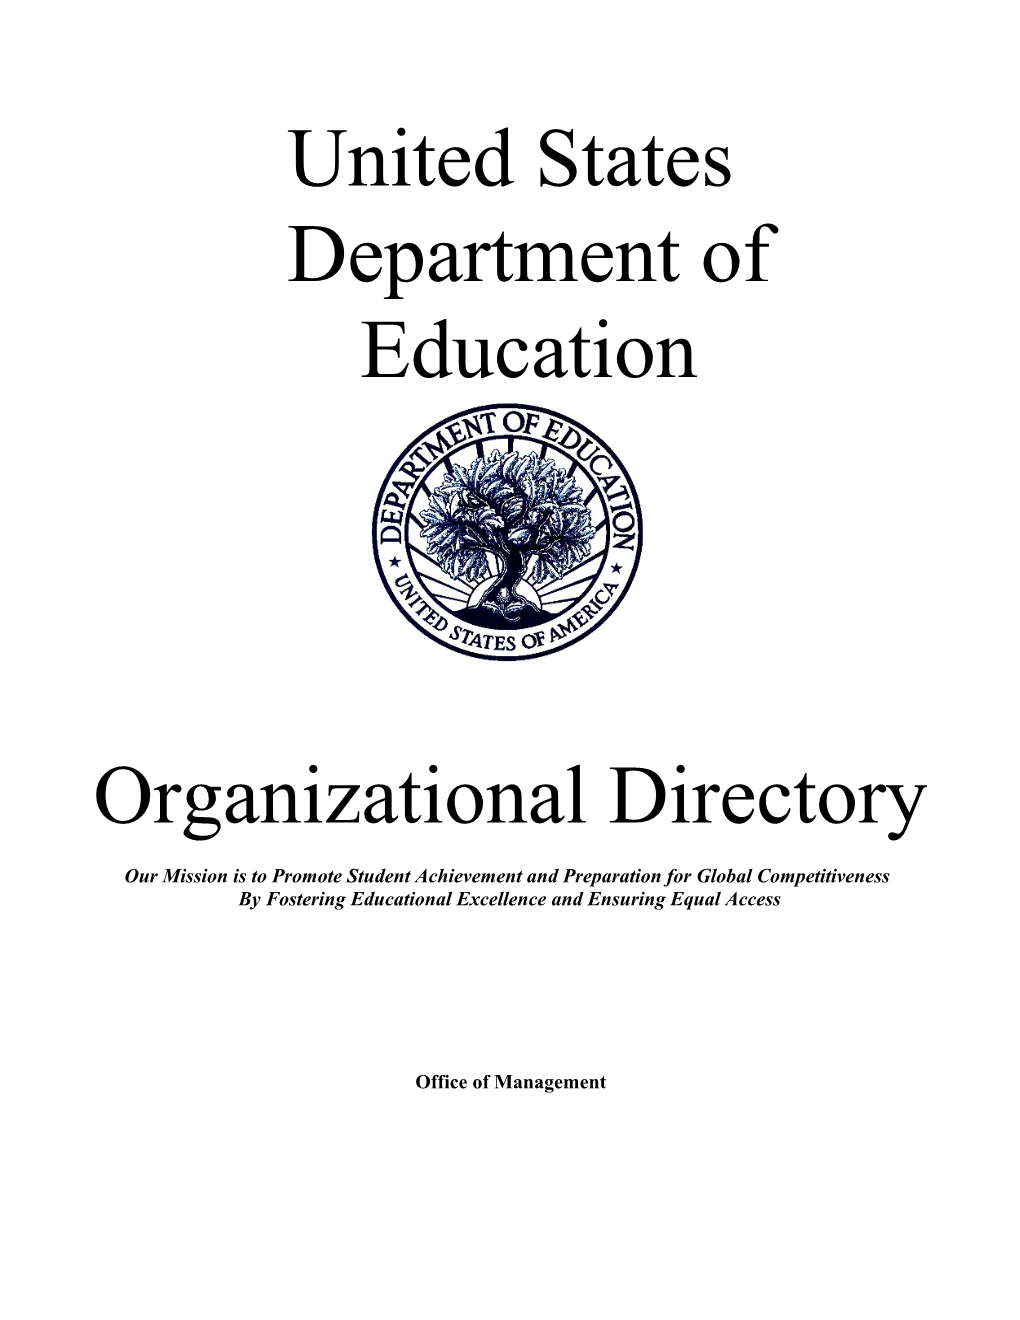 Department of Education Organizational Directory